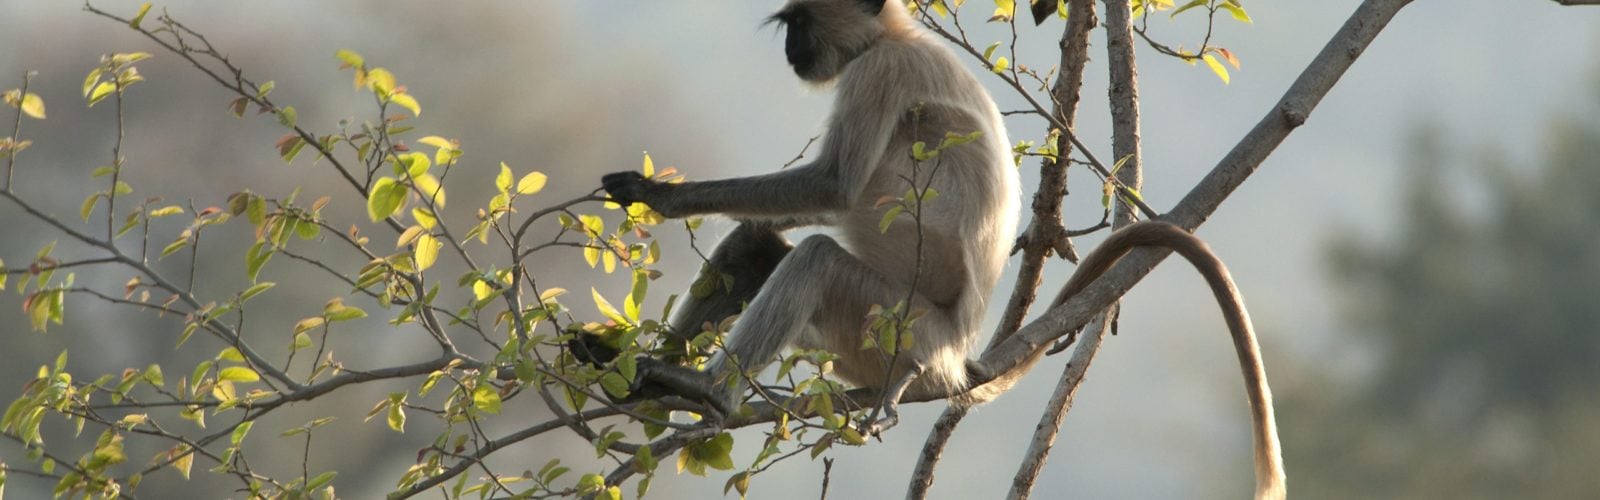 langur-monkey-panna-national-park-india